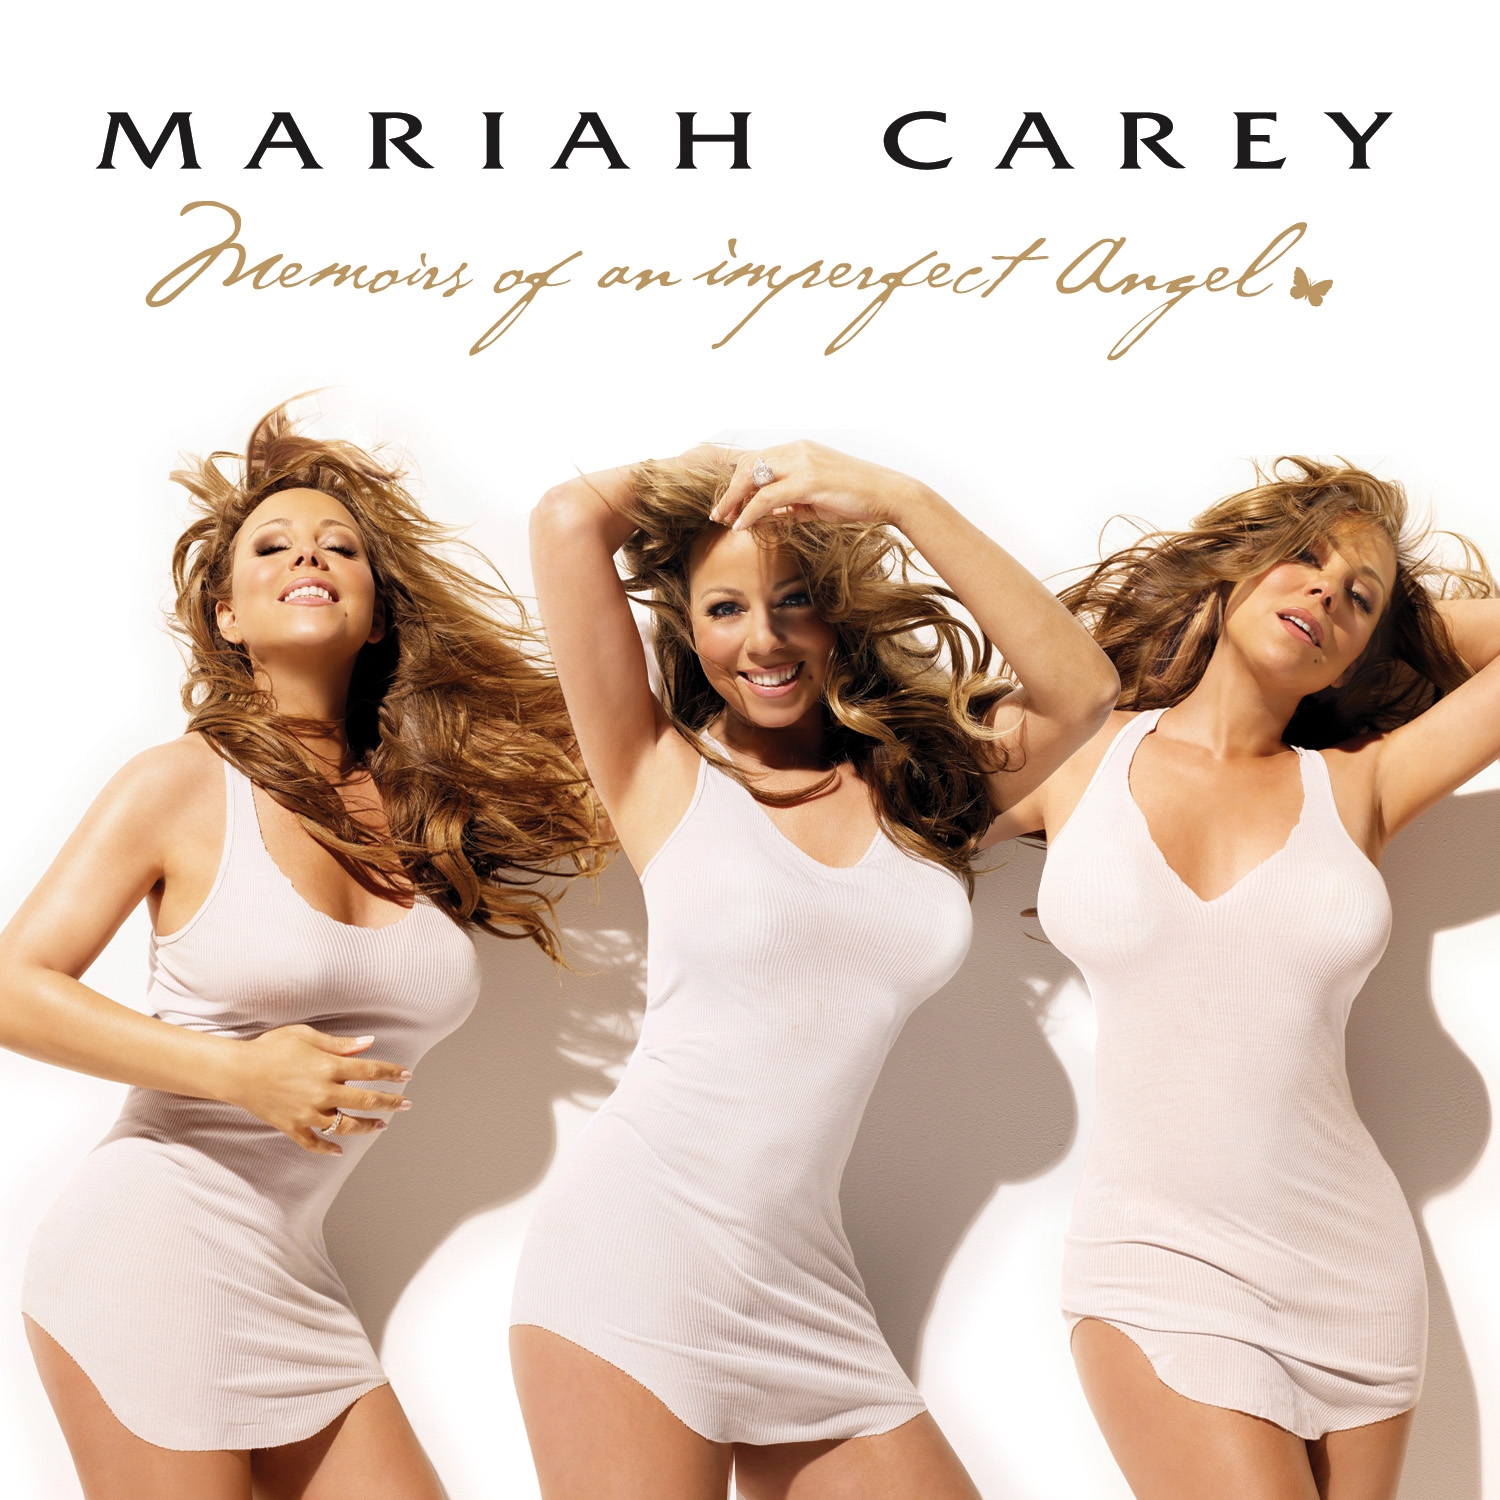 http://1.bp.blogspot.com/-6LkIk_VOXdQ/TVpEUEInynI/AAAAAAAAAA4/ZZYaQBMQ9GY/s1600/Mariah-Carey-Album-Cover.JPG